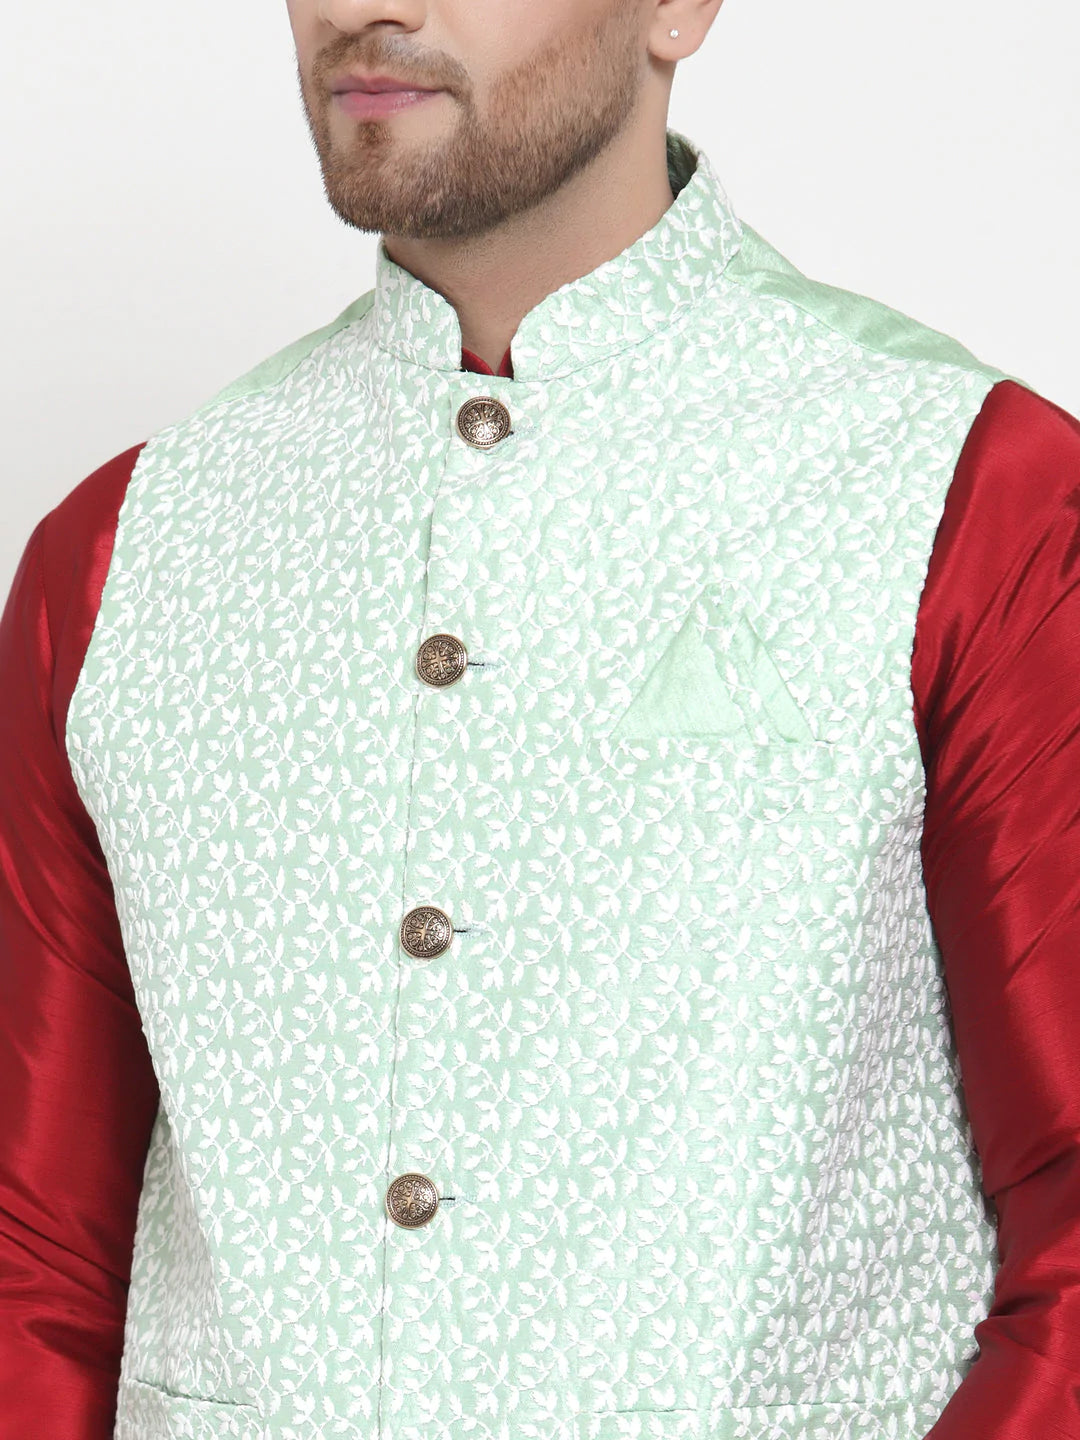 Jompers Men's Solid Dupion Kurta Pajama with Embroidered Nehru Jacket ( JOKPWC M-D 4012Light-Green )